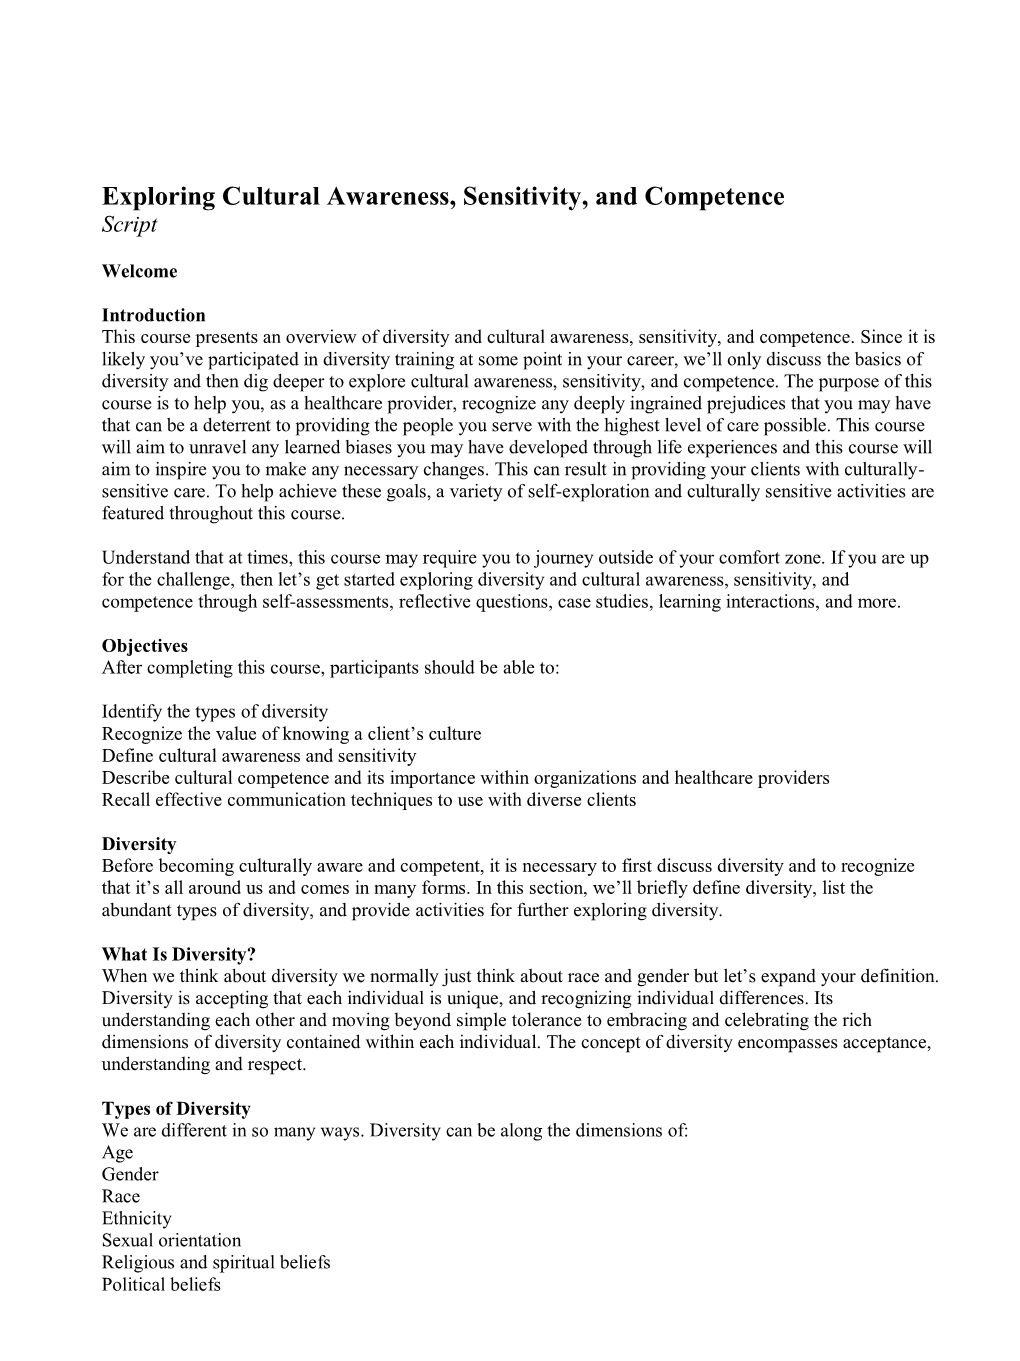 Exploring Cultural Awareness, Sensitivity, and Competence Script